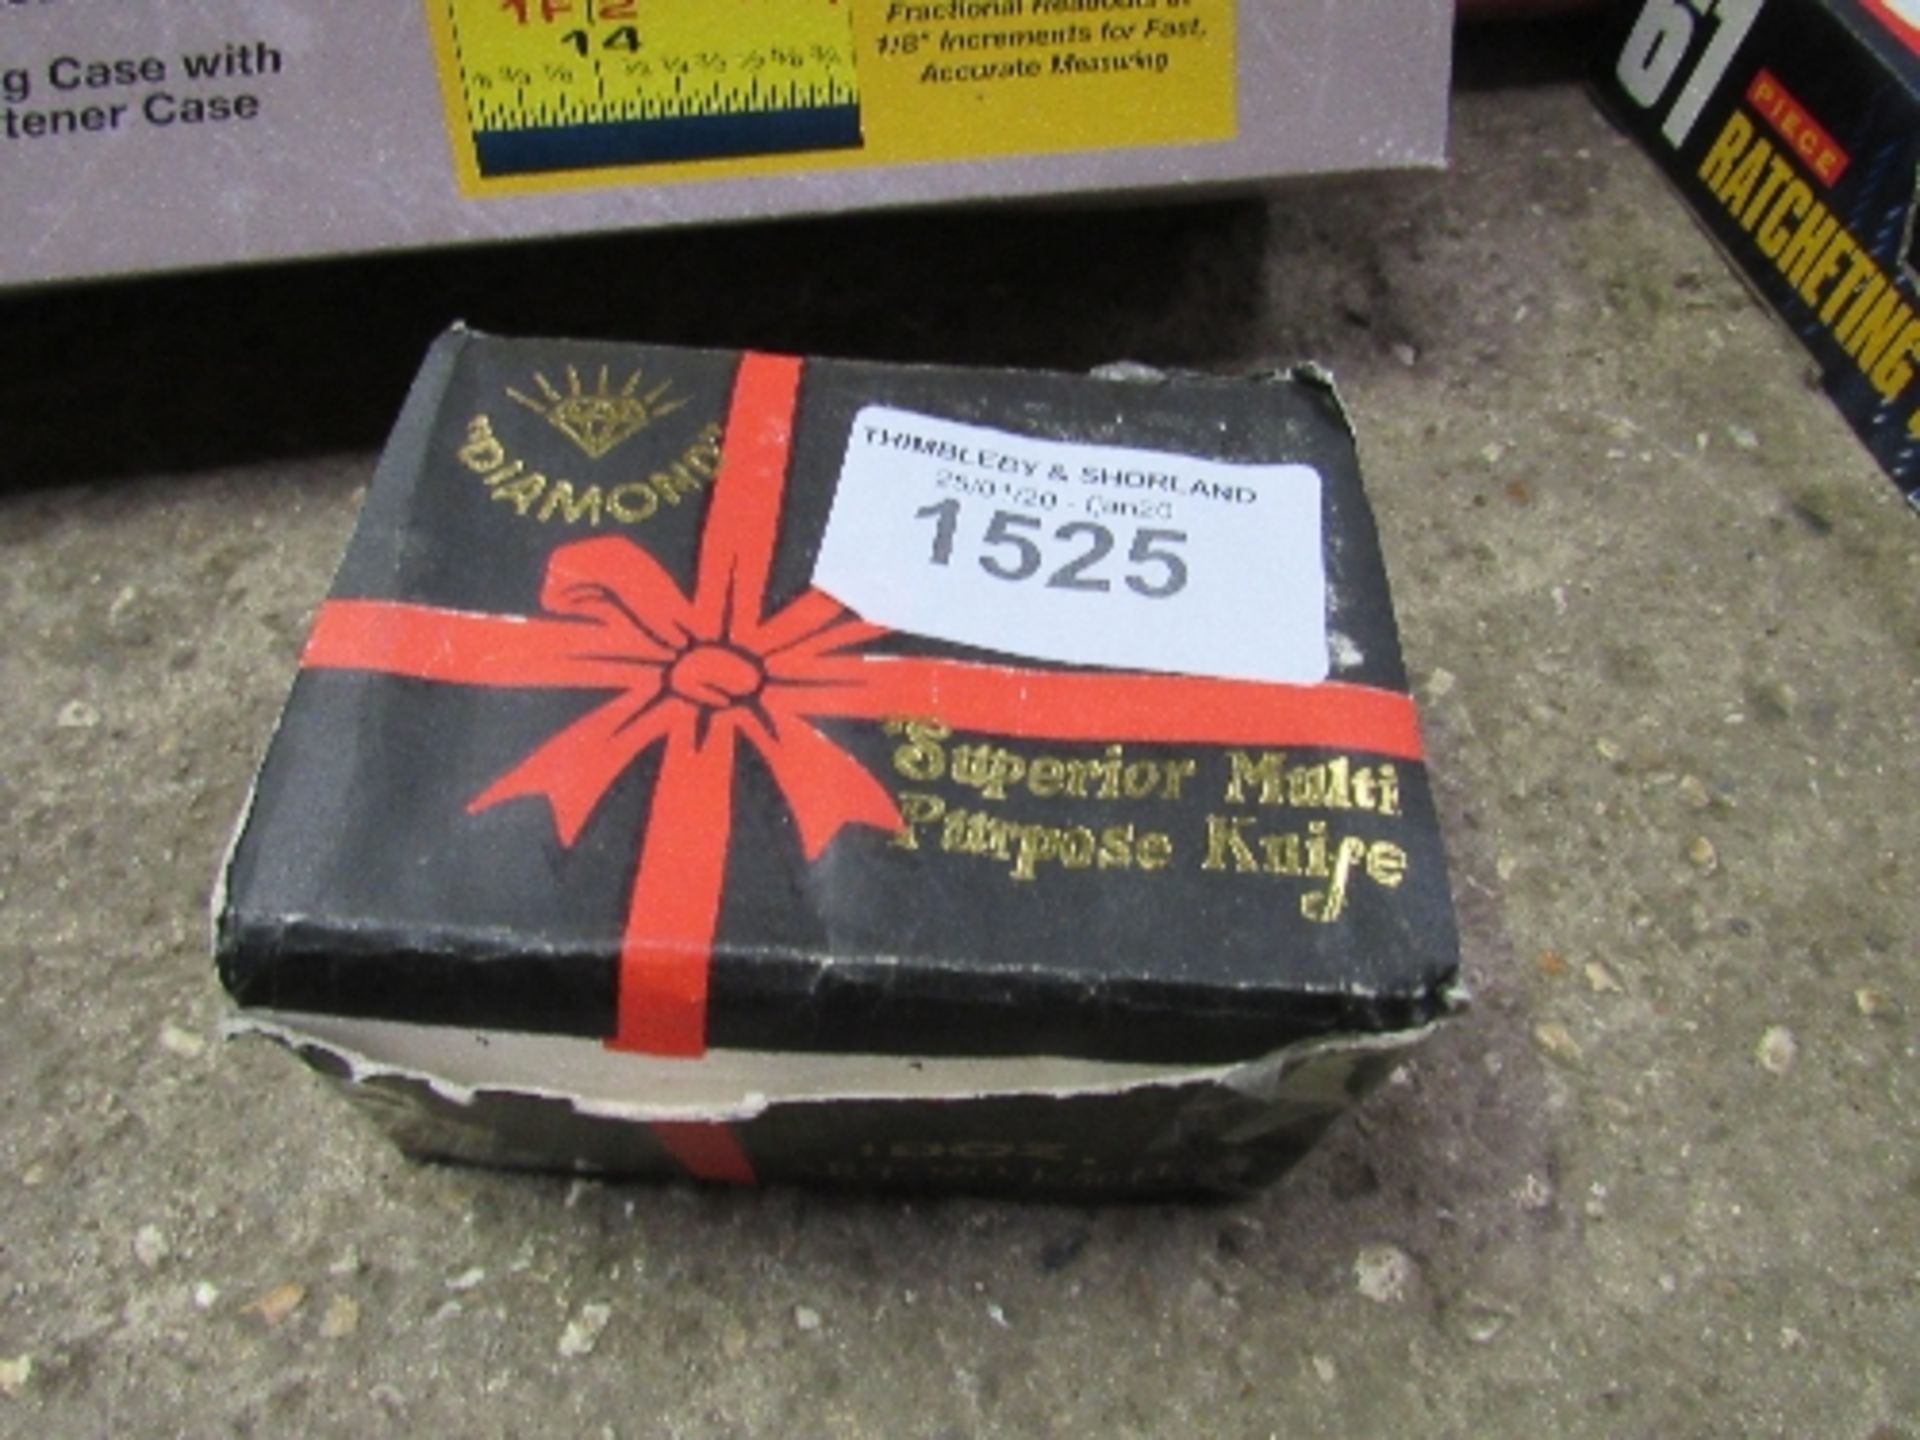 Box of 12 imitation Swiss Army knives